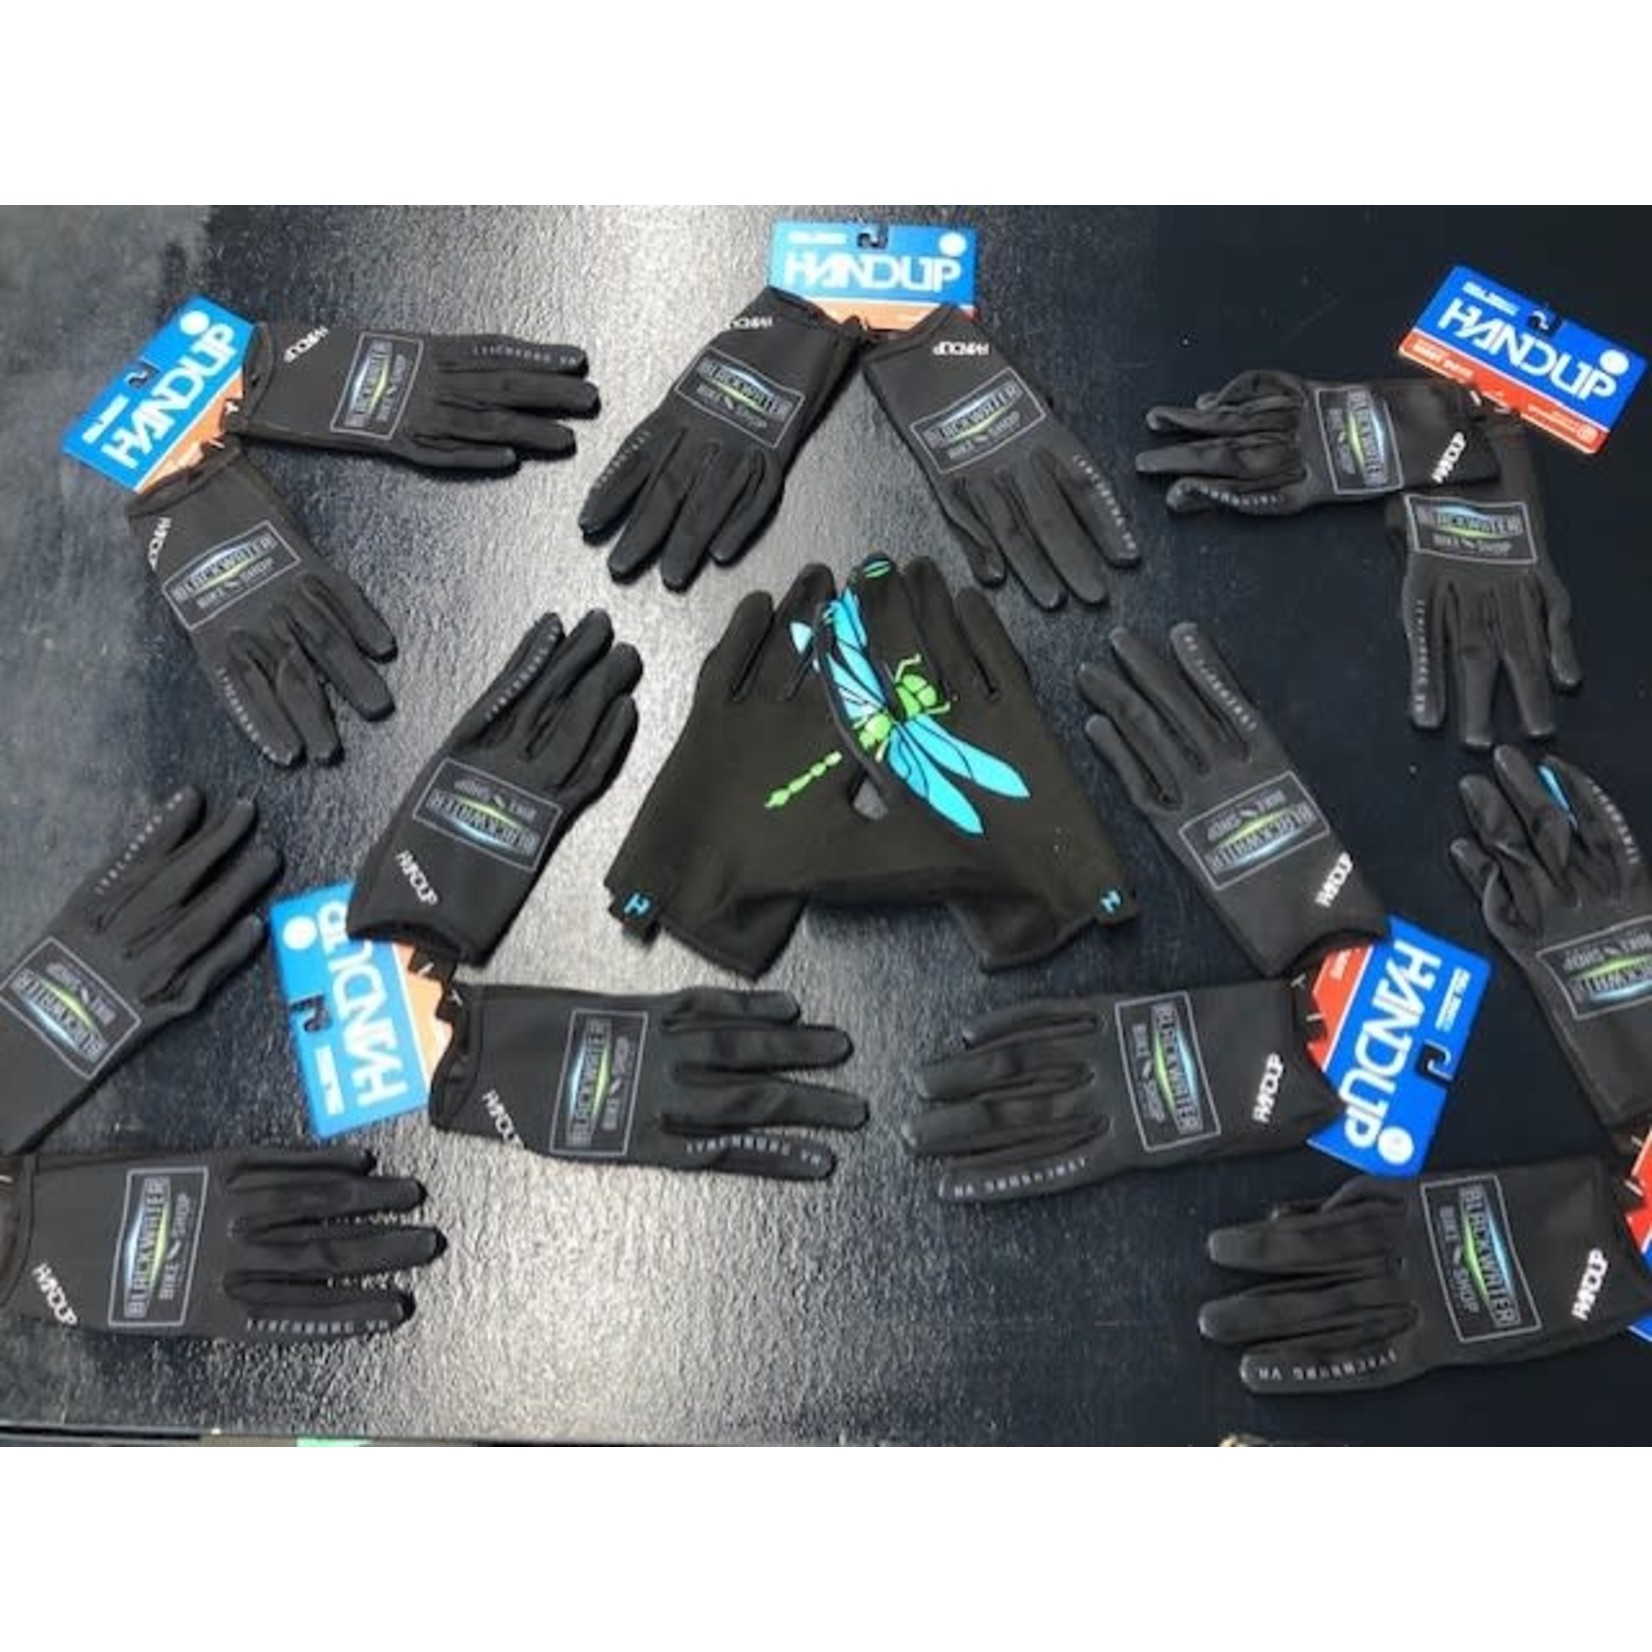 Handup Blackwater "Most Days" Gloves